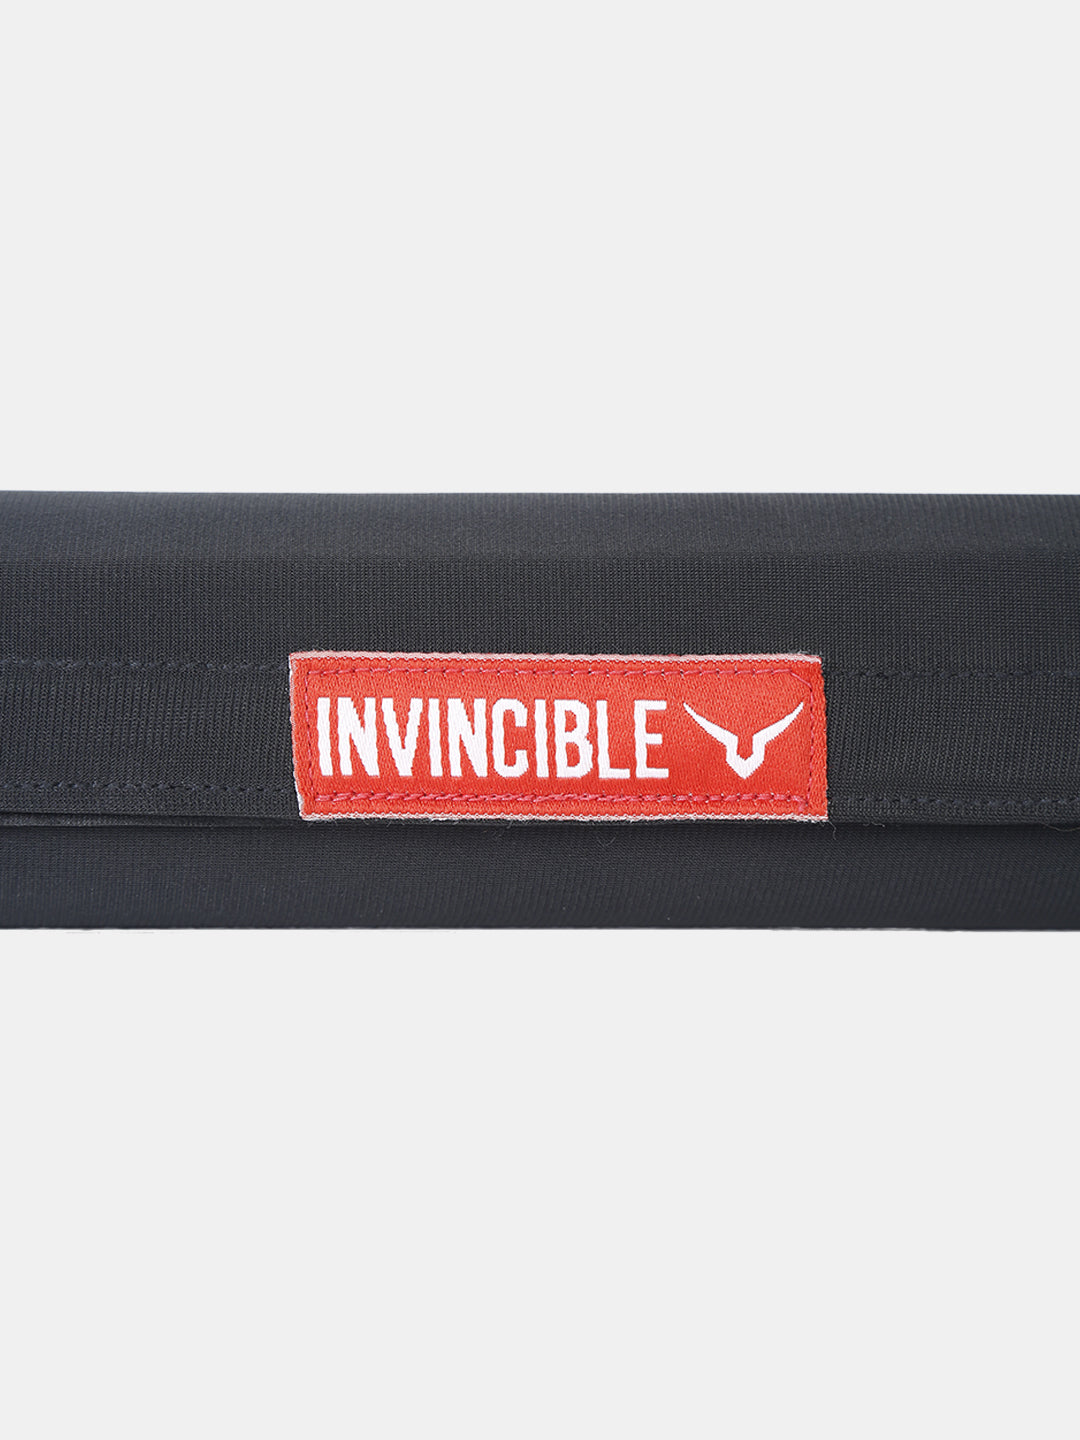 Invincible Barbell Squat Weight Lifting Pad